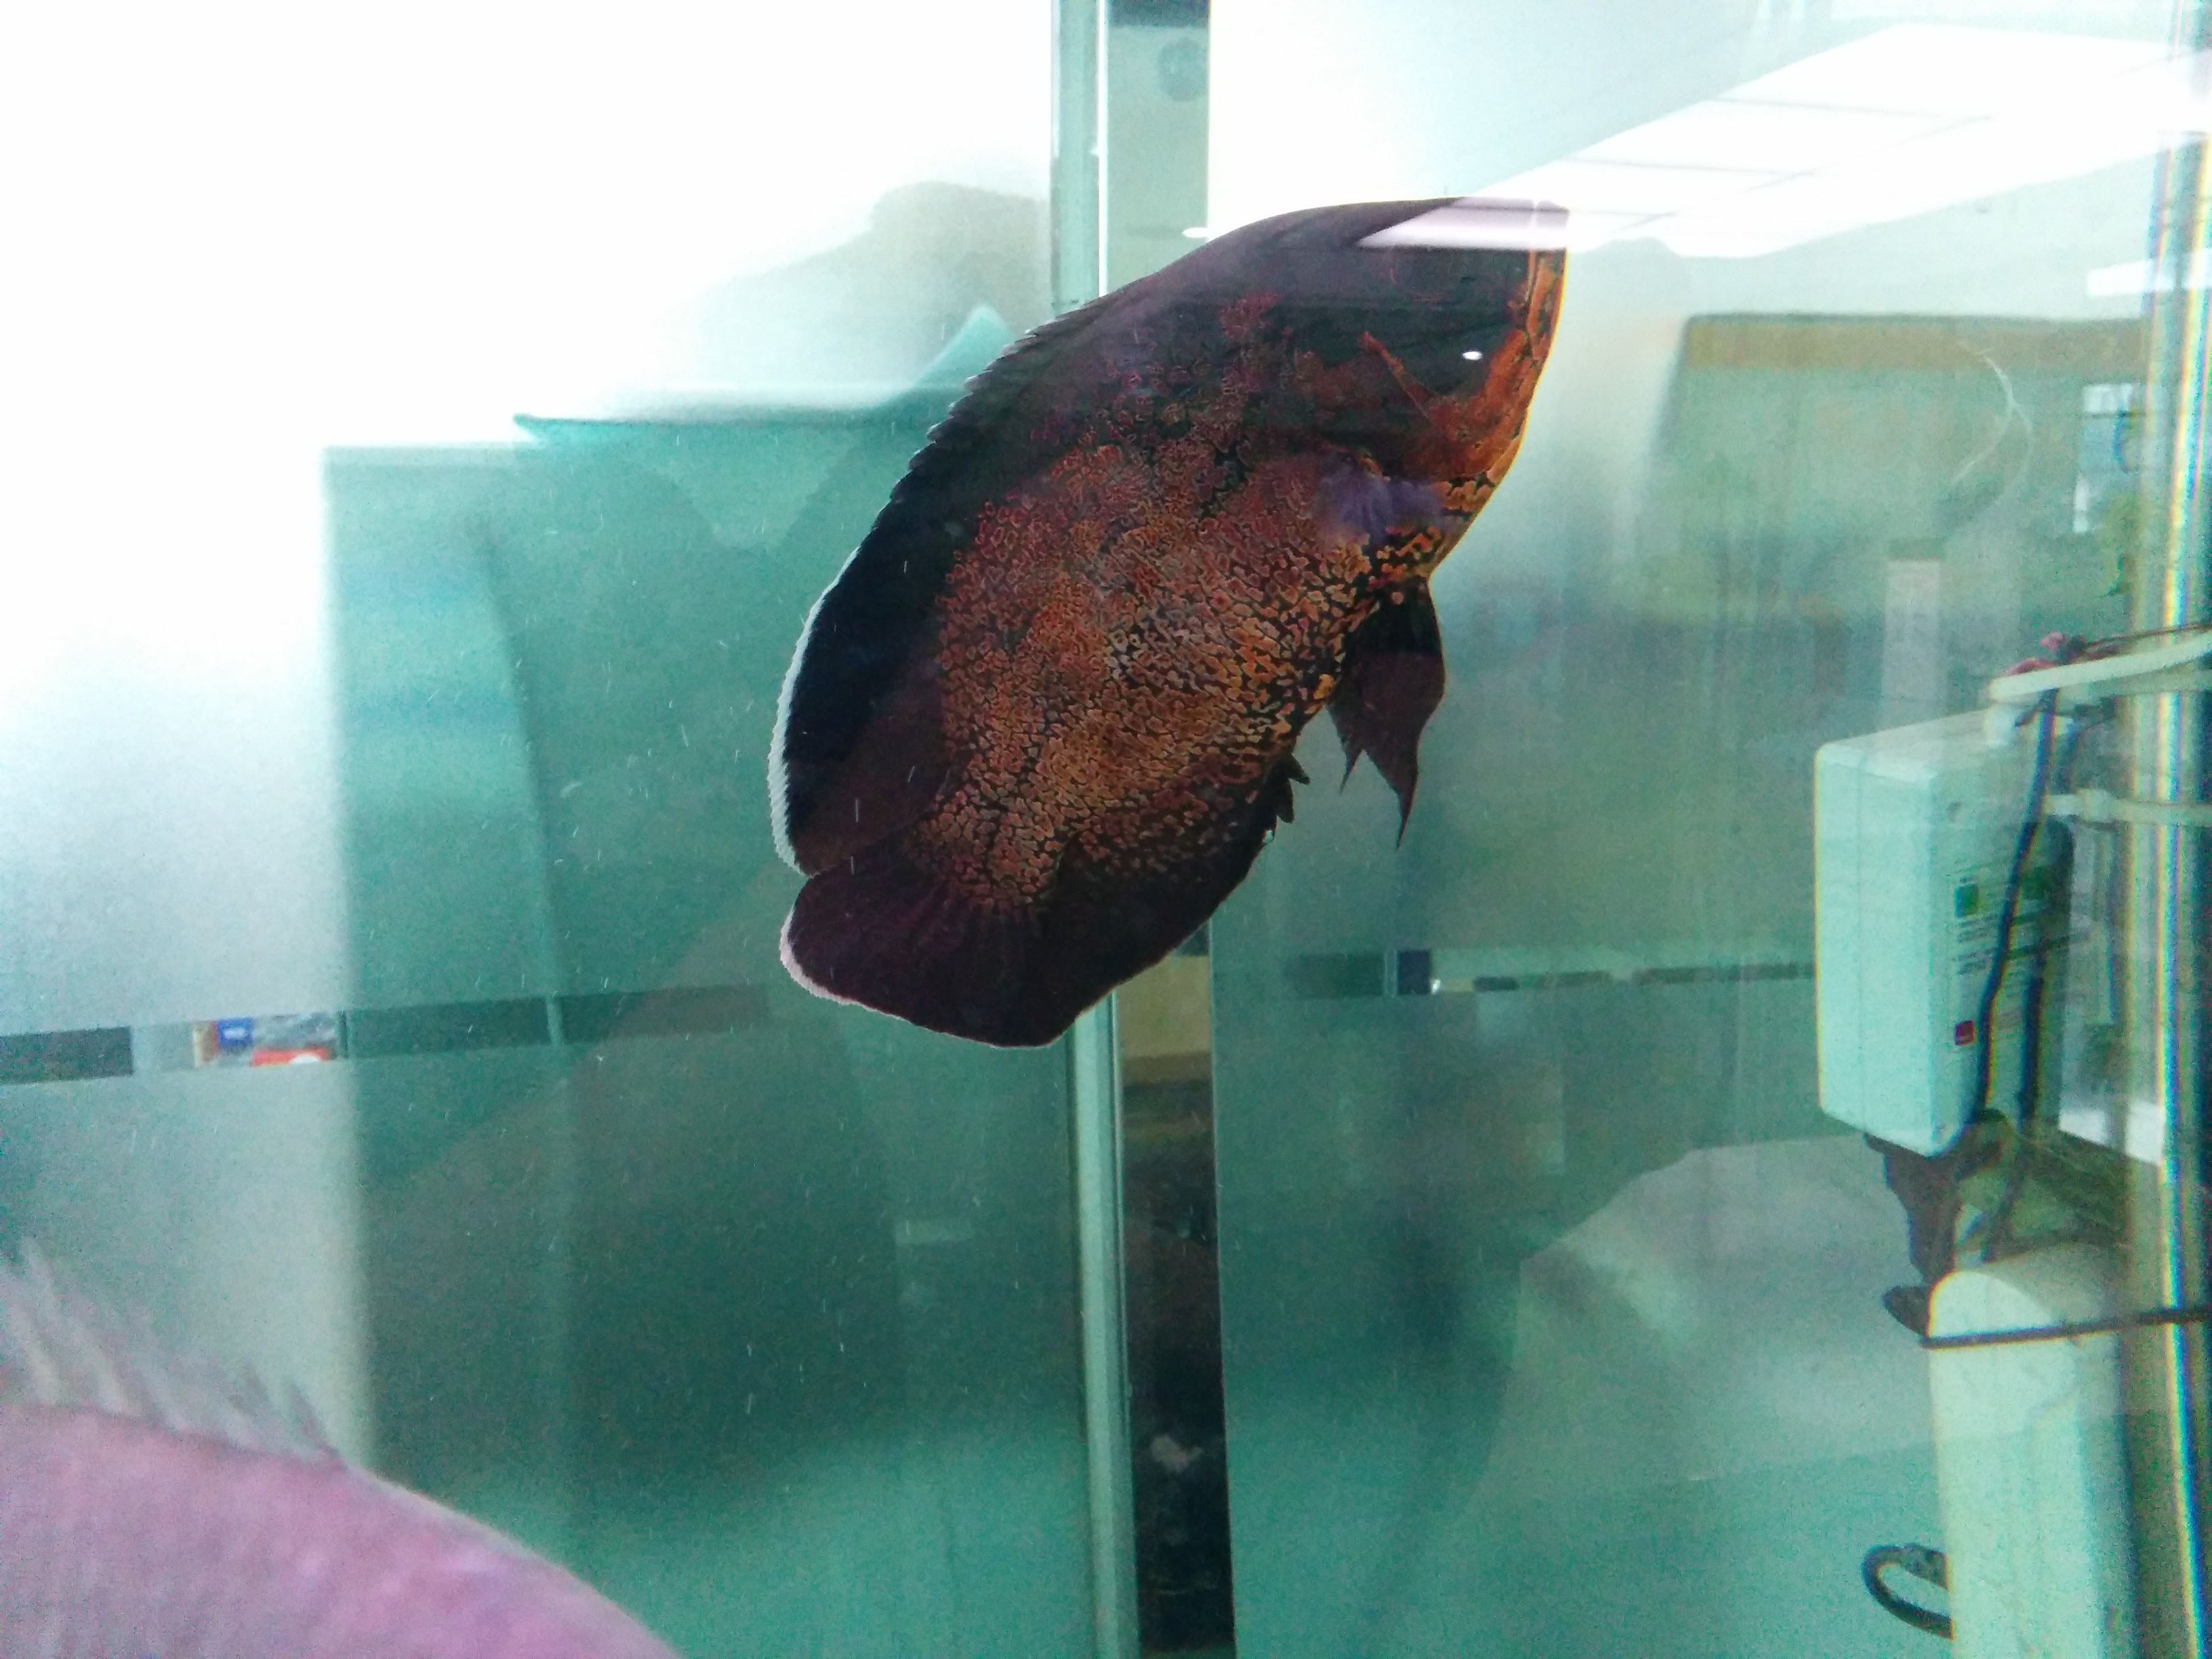 IMG_20151207_141518.jpg 수족관의 검붉은 색 관상용 물고기.. 타이거 오스카(Tiger Oscar), Astronotus ocellatus